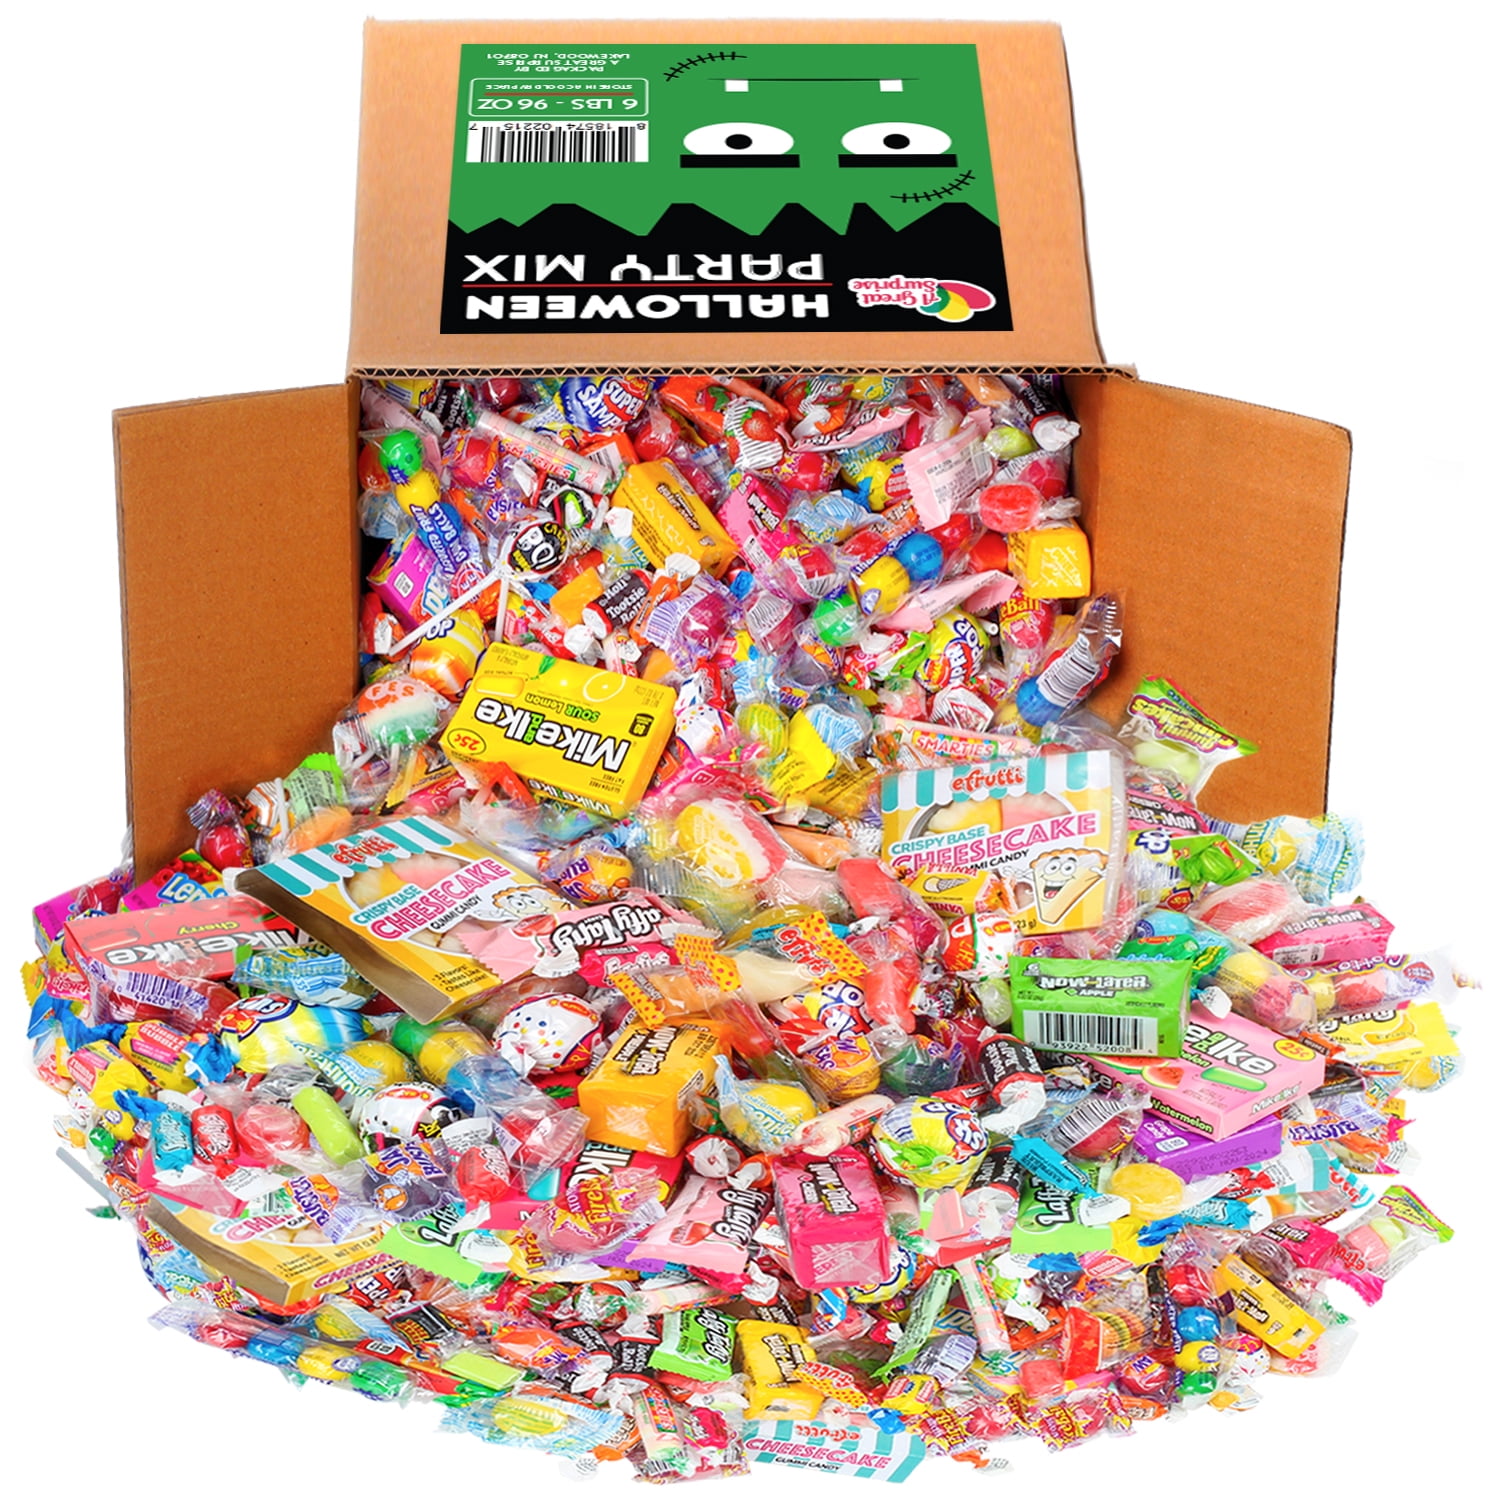 big bags of candy at walmart